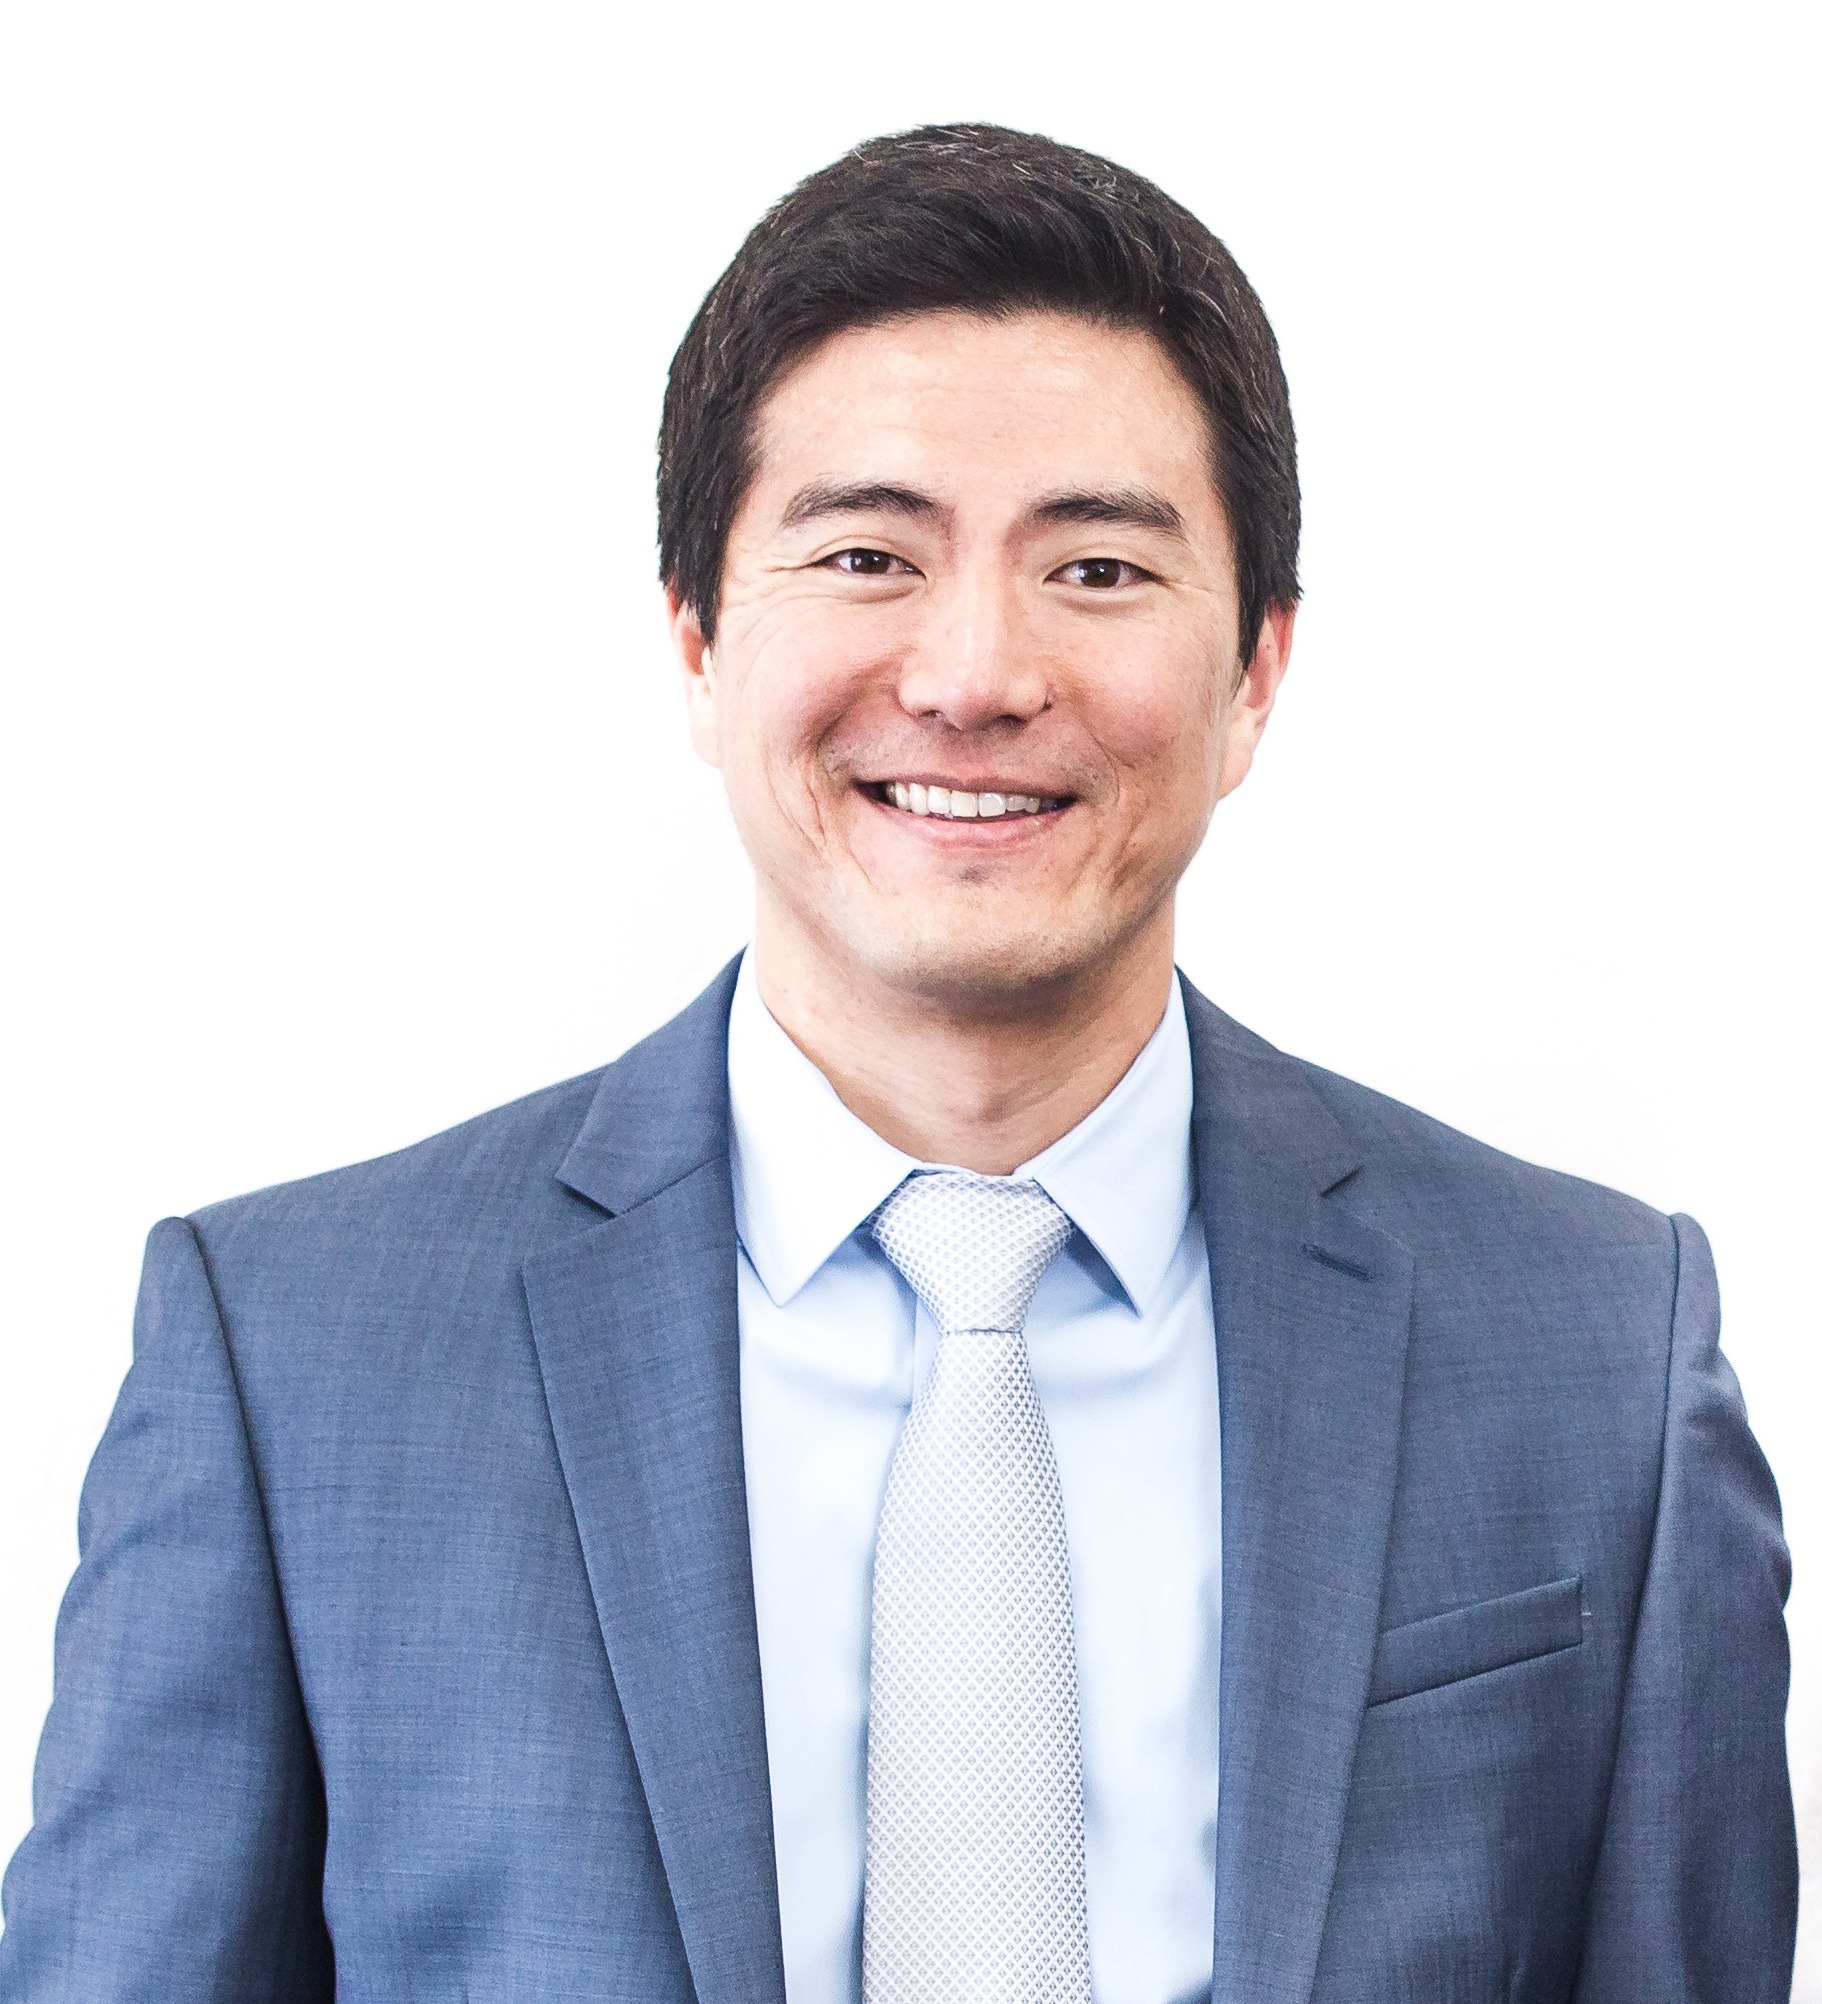 Dean S. Ho's Profile Image